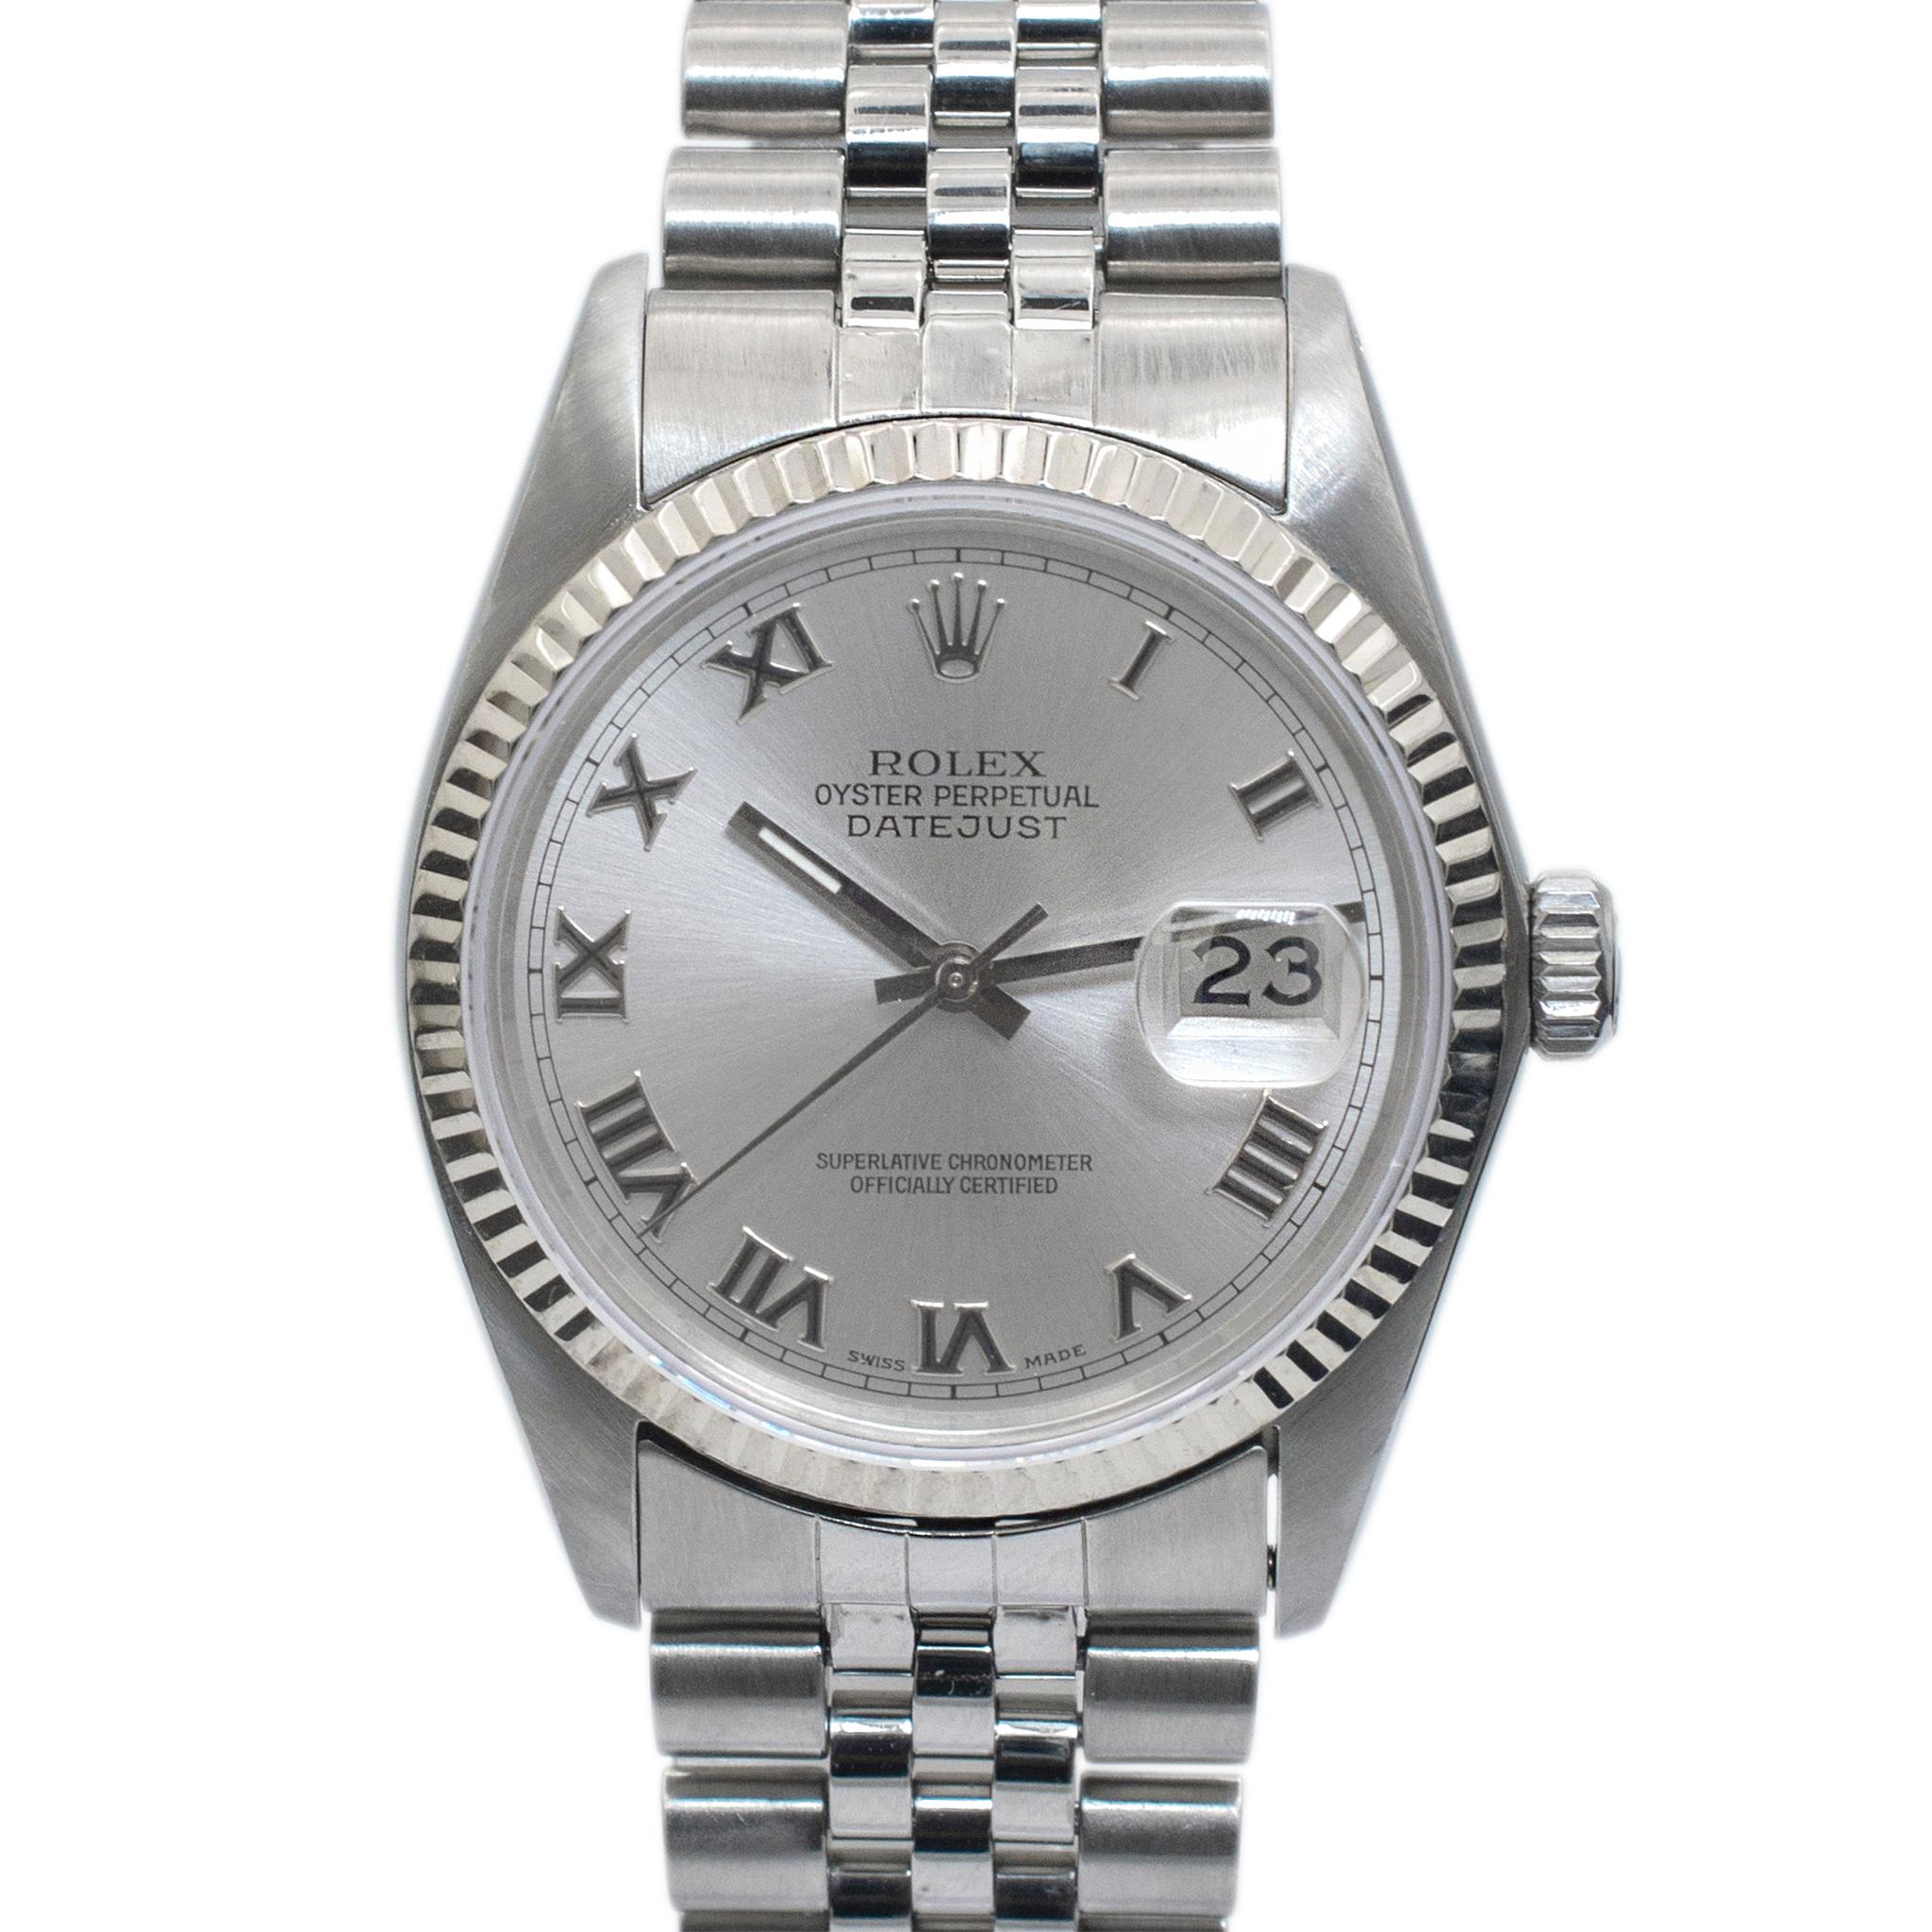 Brand: Rolex

Gender: Unisex

Metal Type: Stainless Steel

Diameter: 36.00 mm

Weight: 88.90 grams

Stainless steel, ROLEX Swiss-made watch. The 